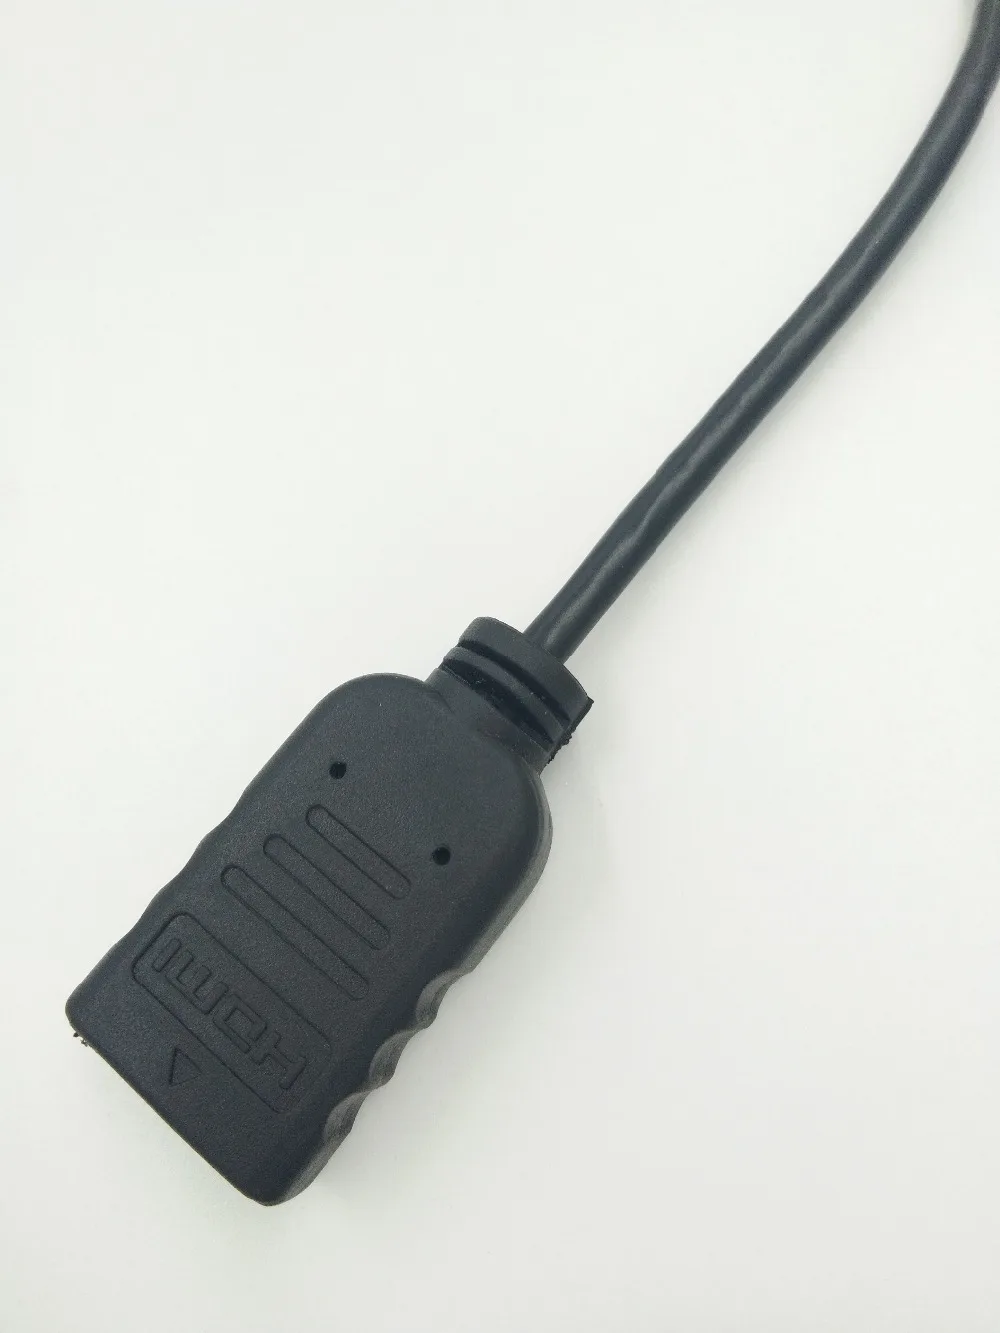 Адаптер Micro HDMI штекер гнездо преобразователь micro 1080P конвертер для планшетного ПК